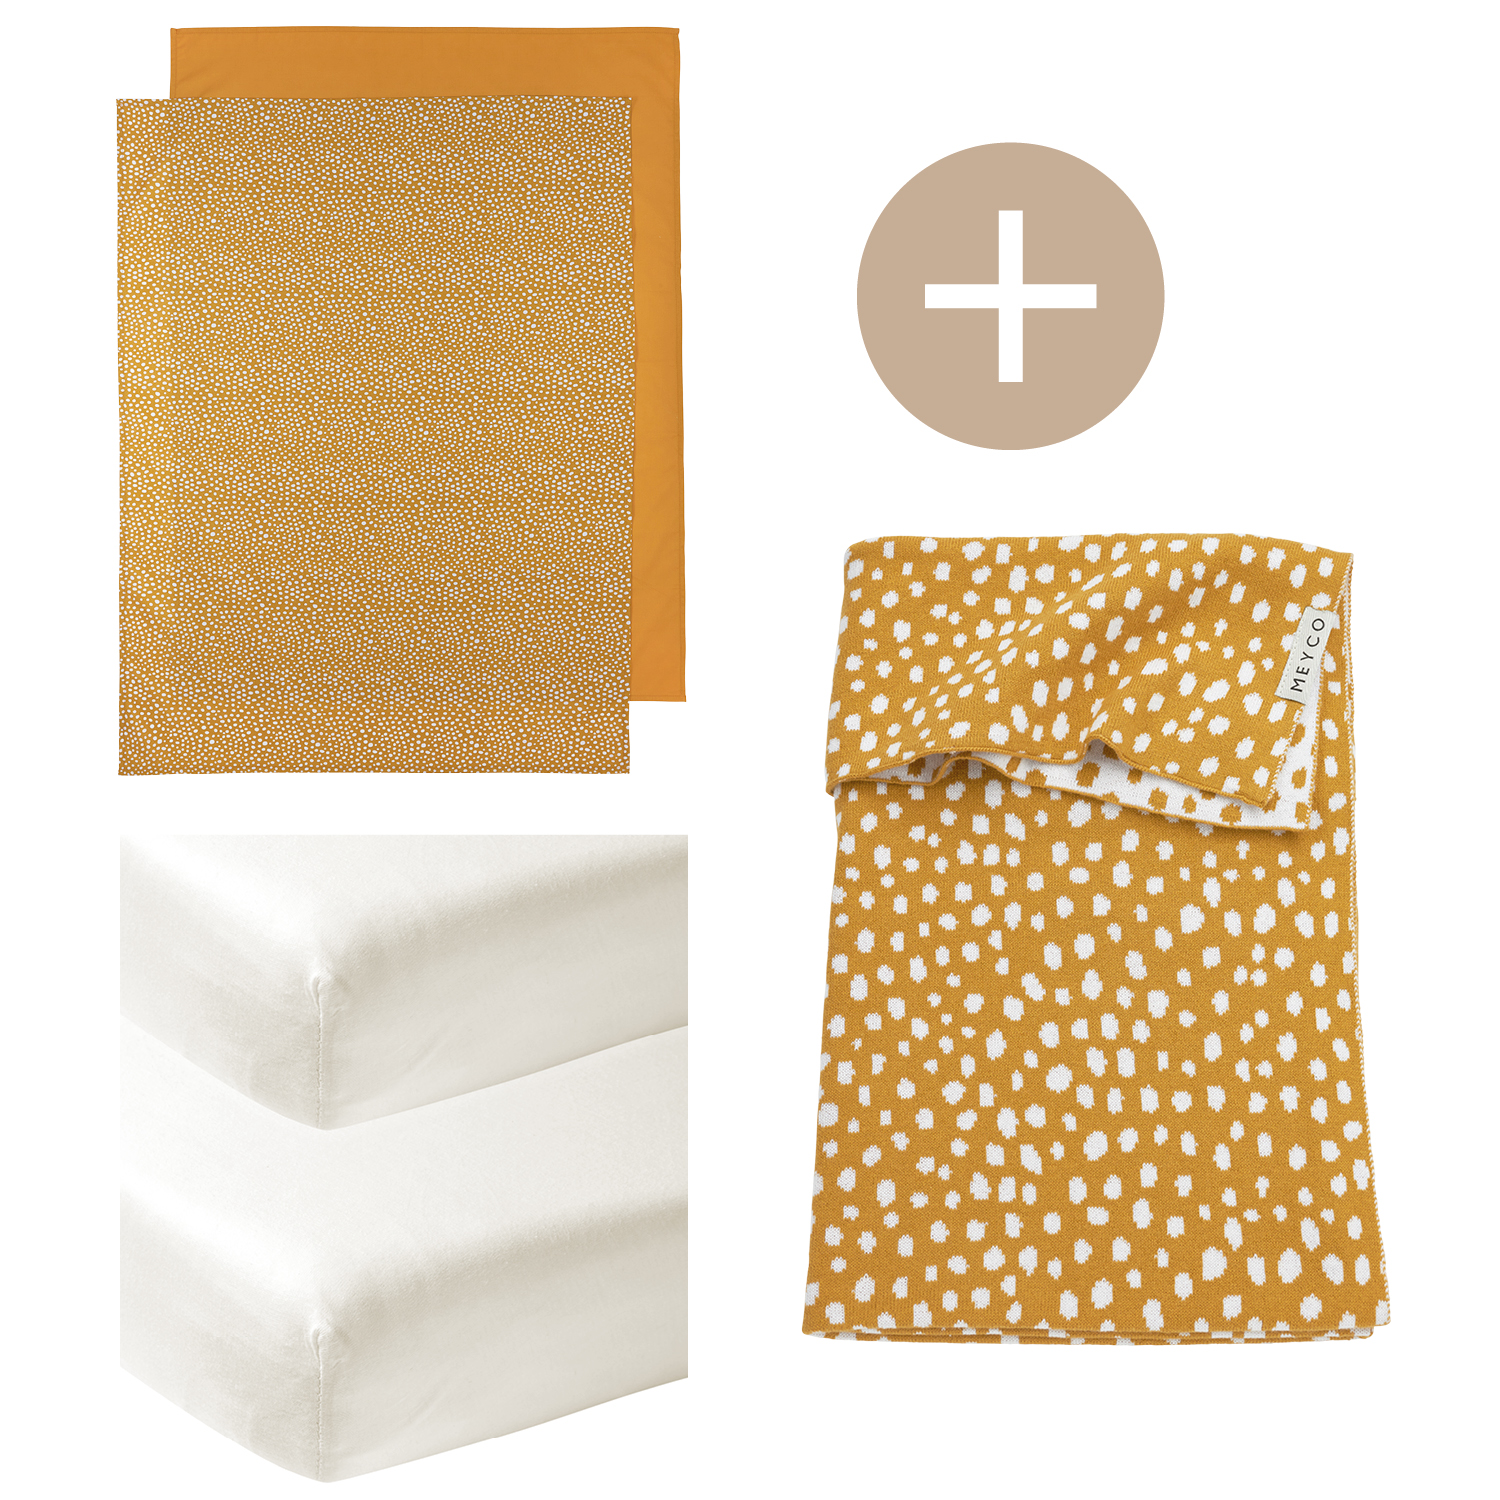 Crib bed blanket + 2-pack crib sheets + 2-pack fitted sheet crib Cheetah - honey gold - 75x100cm